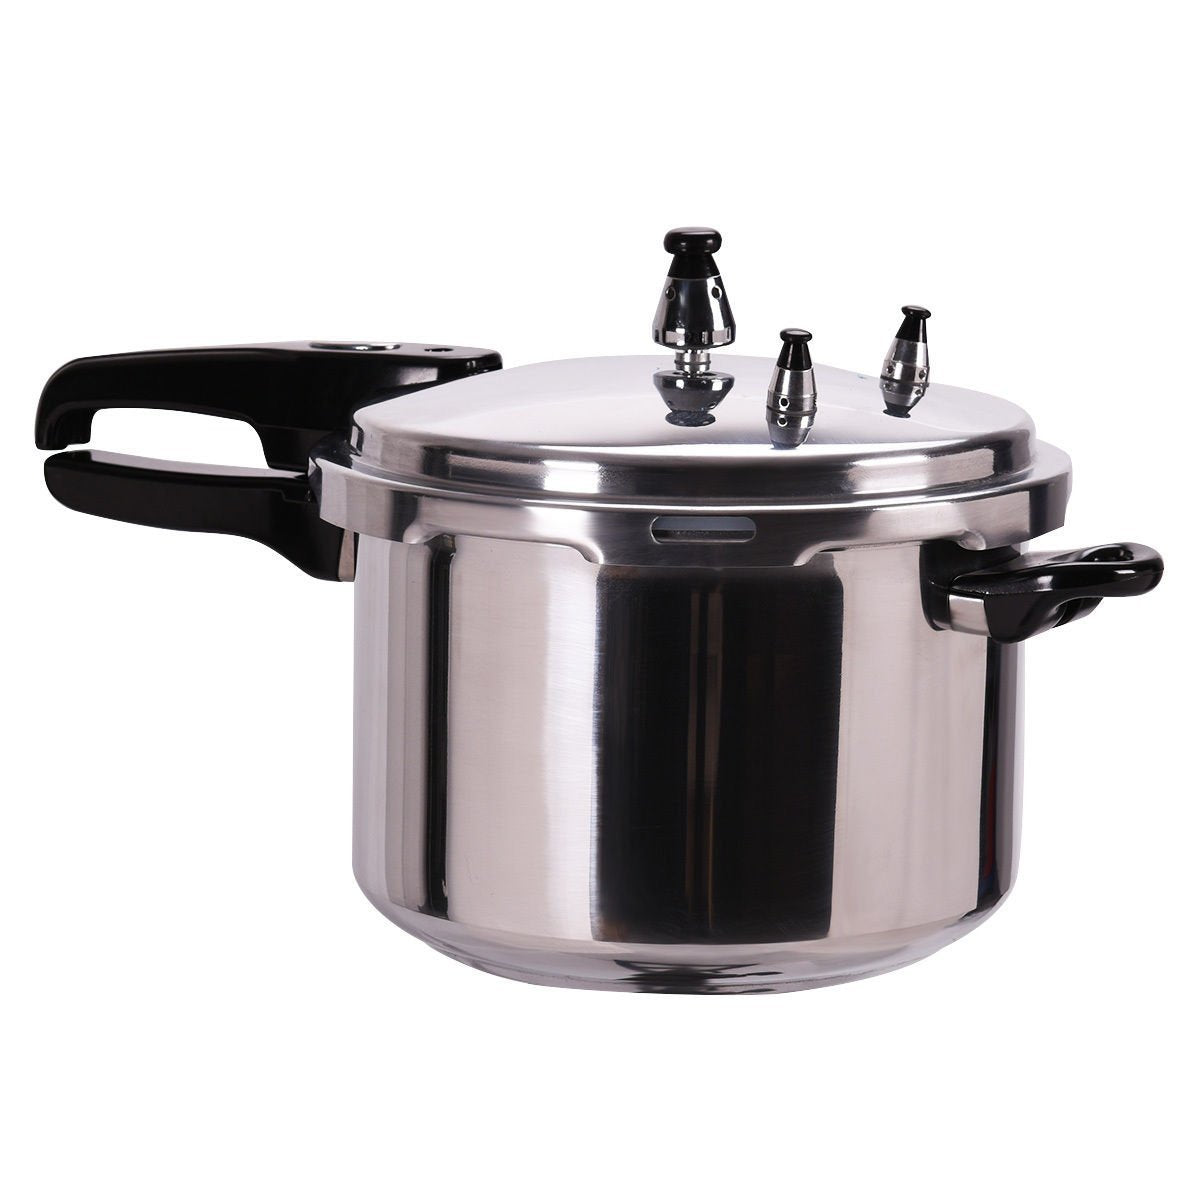 Costway 6-Quart Aluminum Pressure Cooker Fast Cooker Canner Pot Kitchen